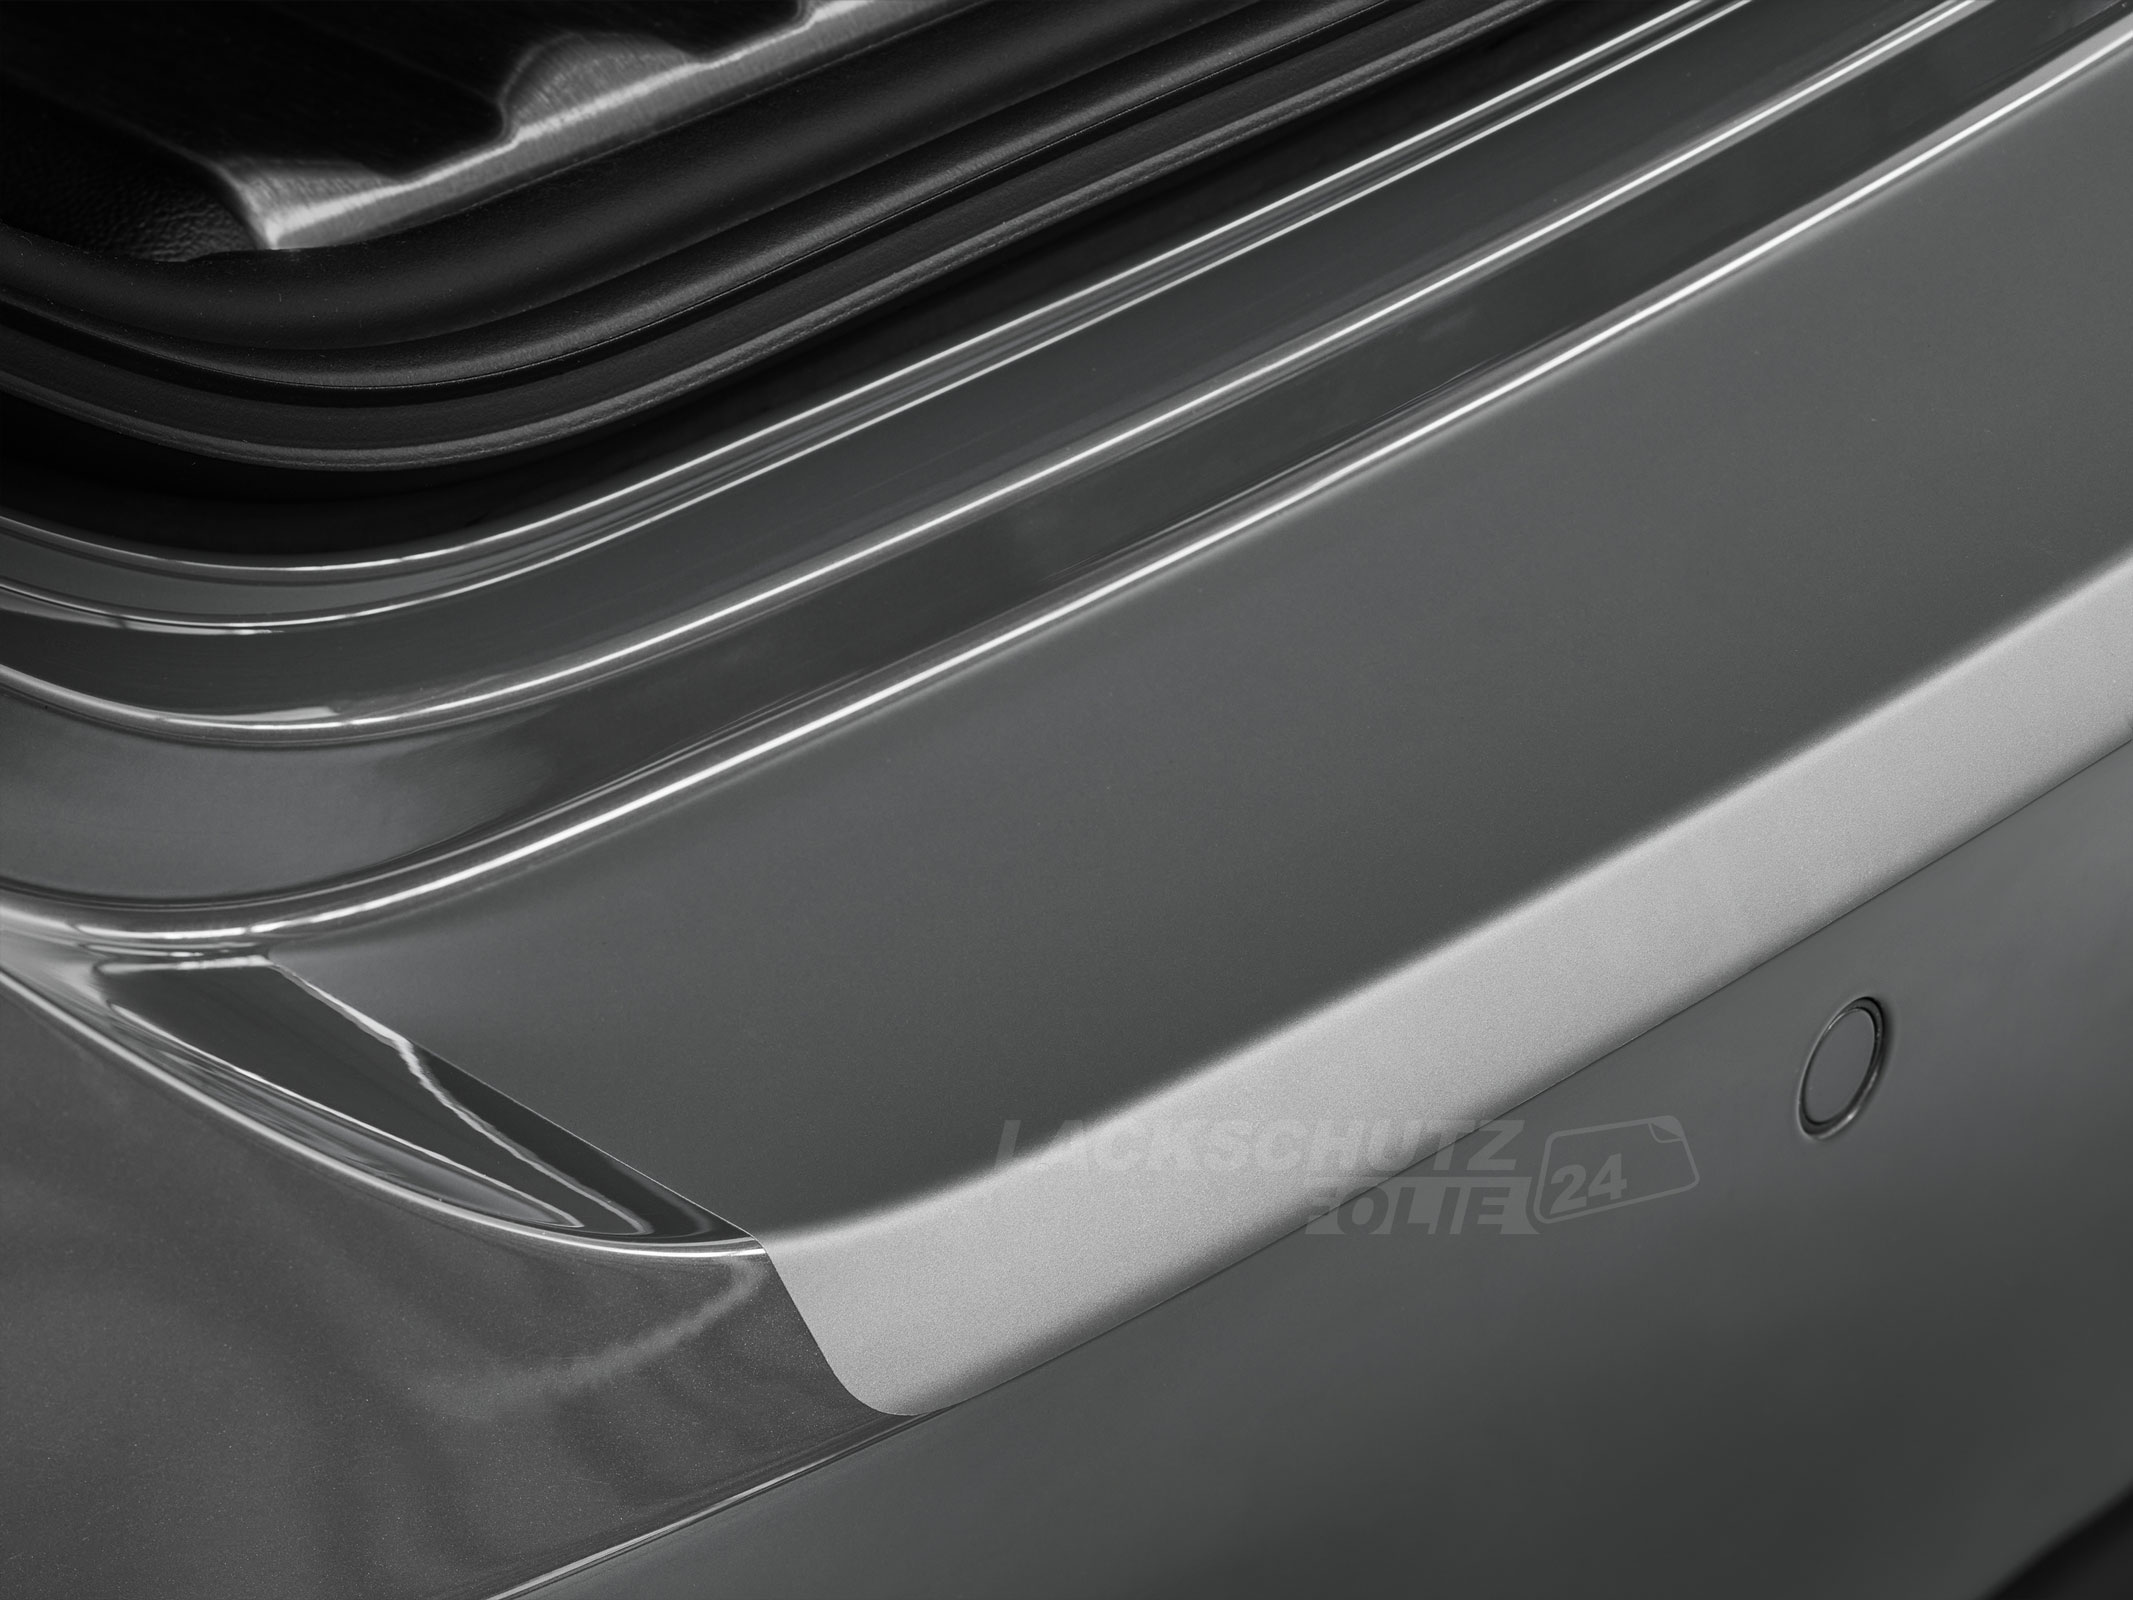 Ladekantenschutzfolie - Transparent Glatt MATT 110 µm stark  für Renault Fluence ab BJ 2010